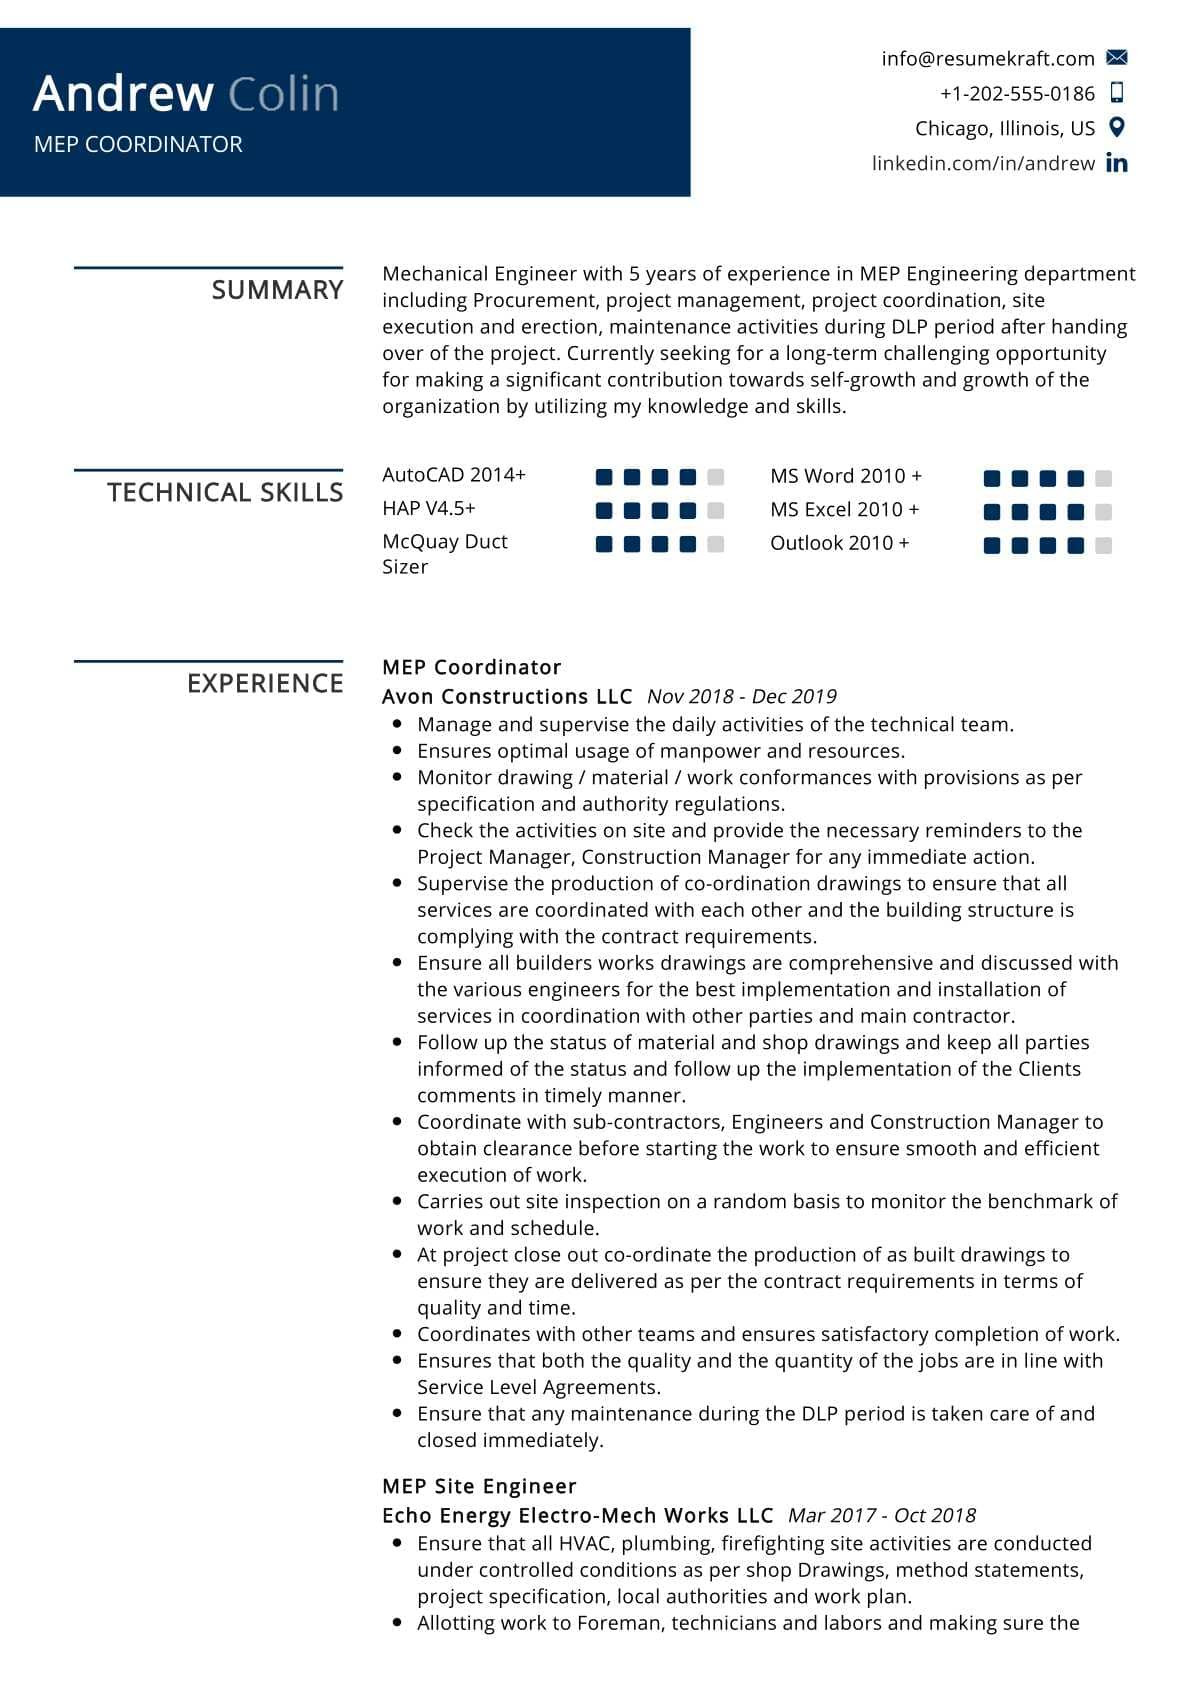 mep coordinator resume sample